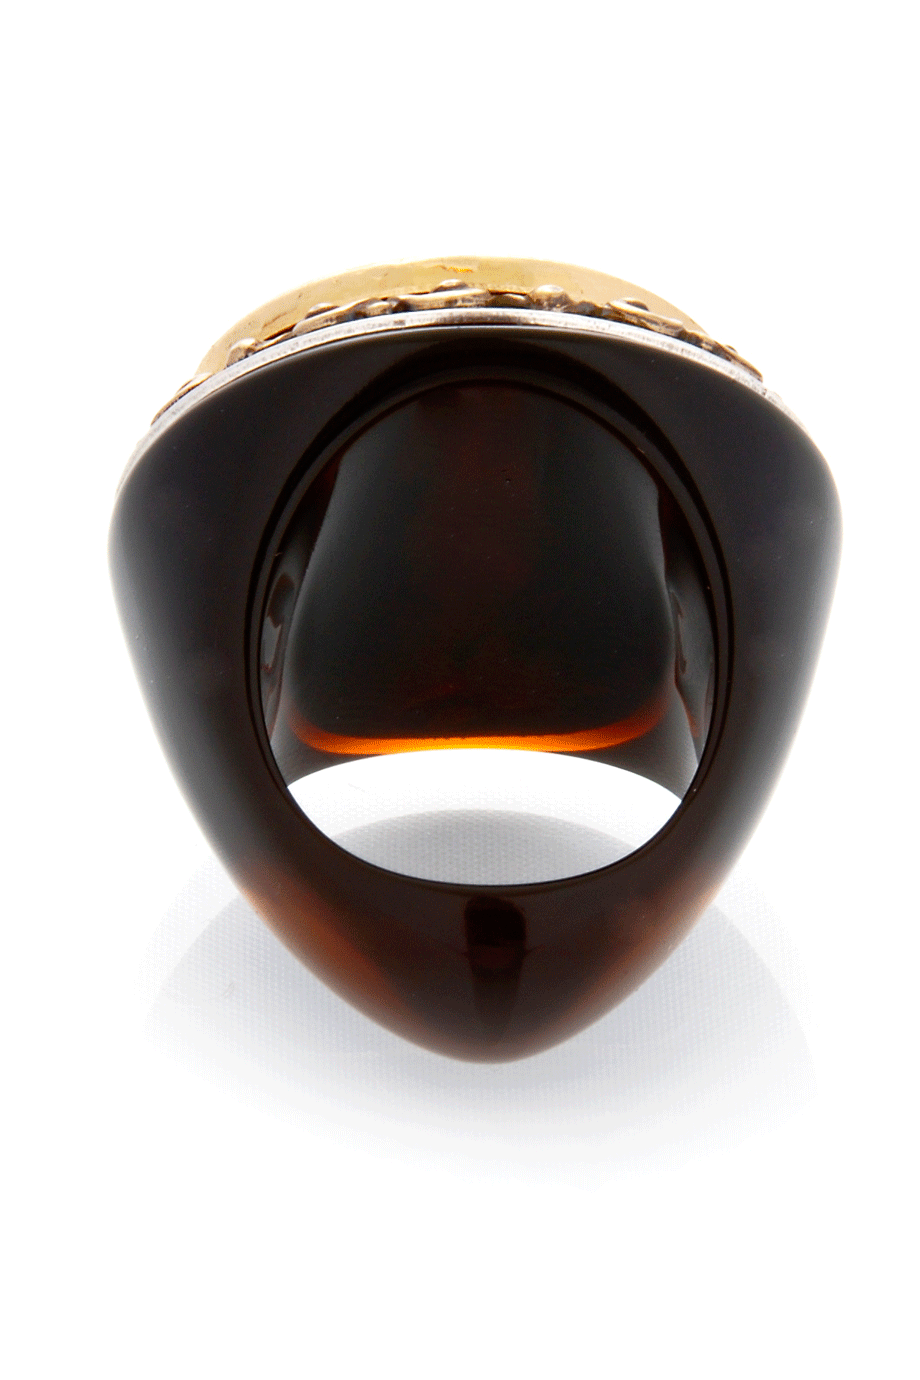 Archaic  Καφέ Μπρονζέ Δαχτυλίδι - Ringseclectic | Κοσμήματα Δαχτυλίδια | Archaic Brown Bronze Ring